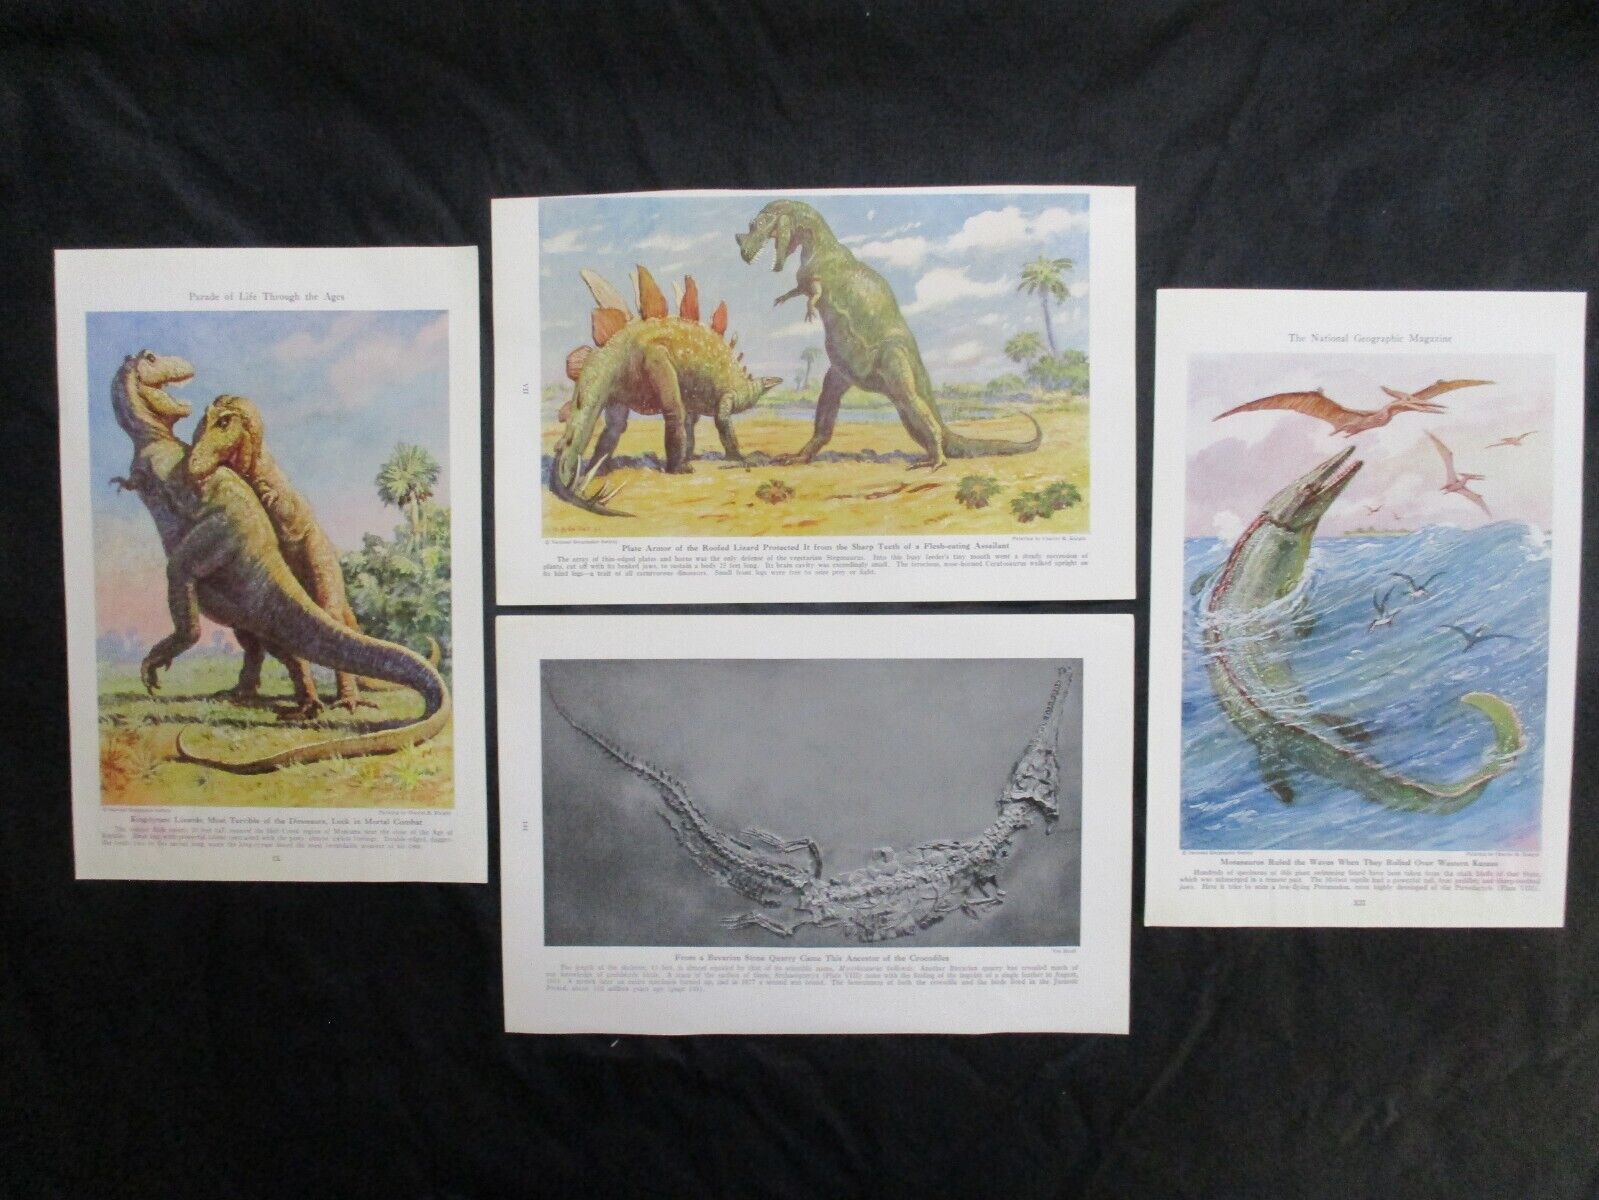 4 1942 Early Life prints by Charles Knight - Mosasaurus, T Rex, Stegasaurus +